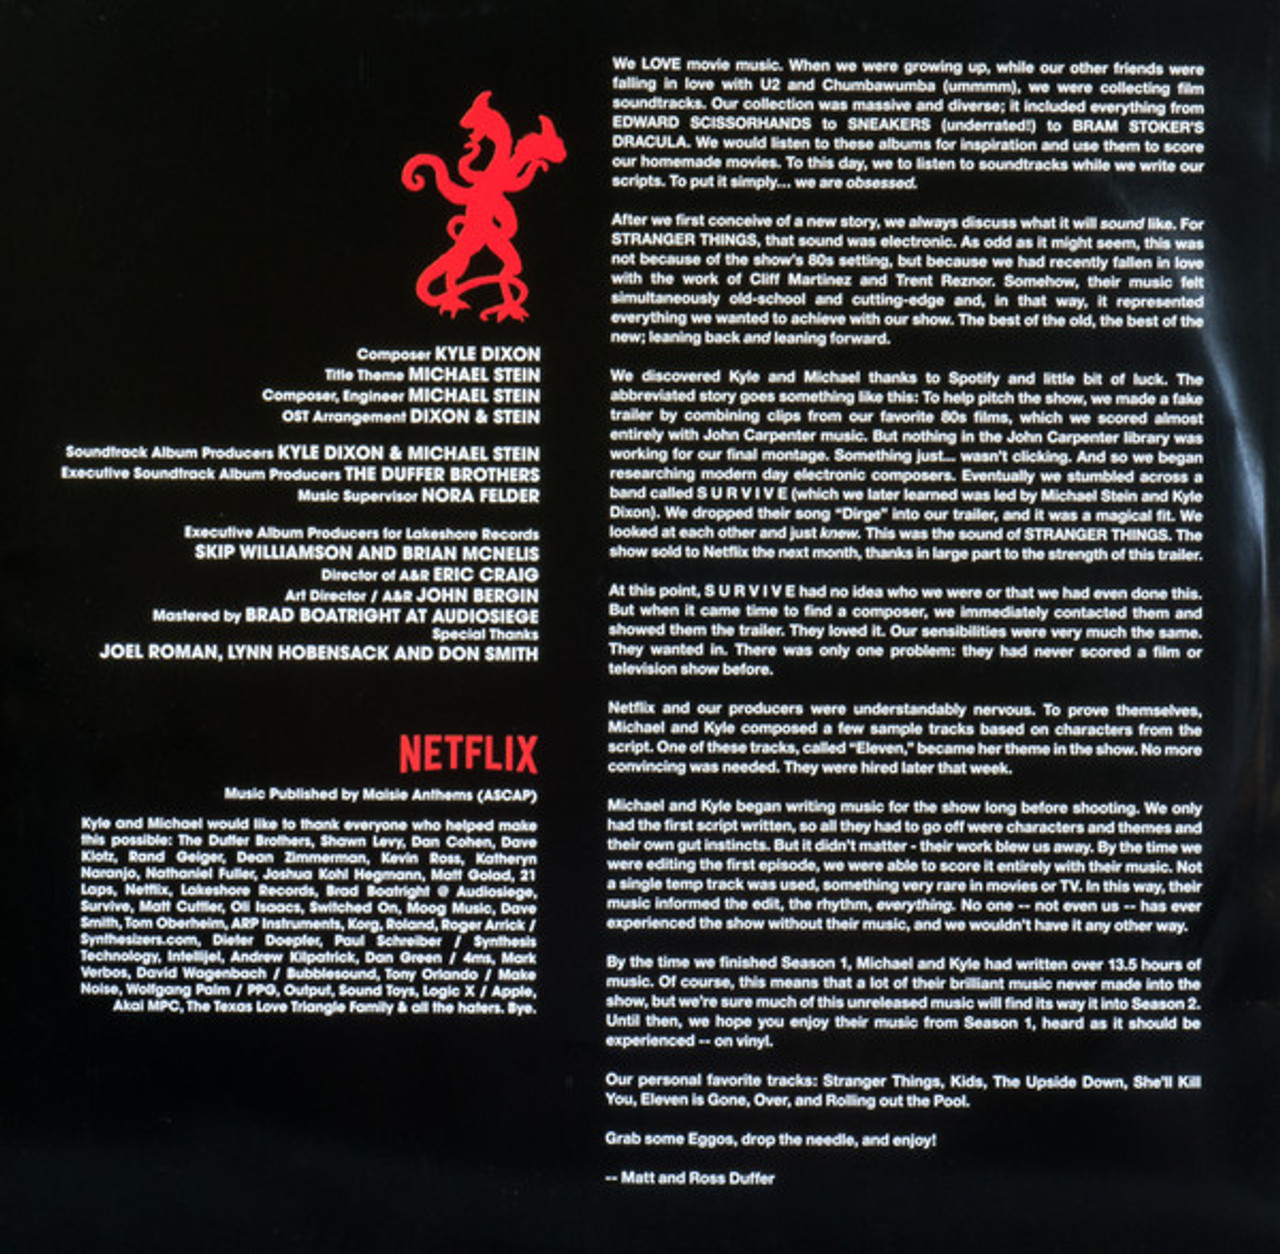 Kyle Dixon & Michael Stein - Stranger Things, Vol. 2 (A Netflix Original  Series Soundtrack) -  Music